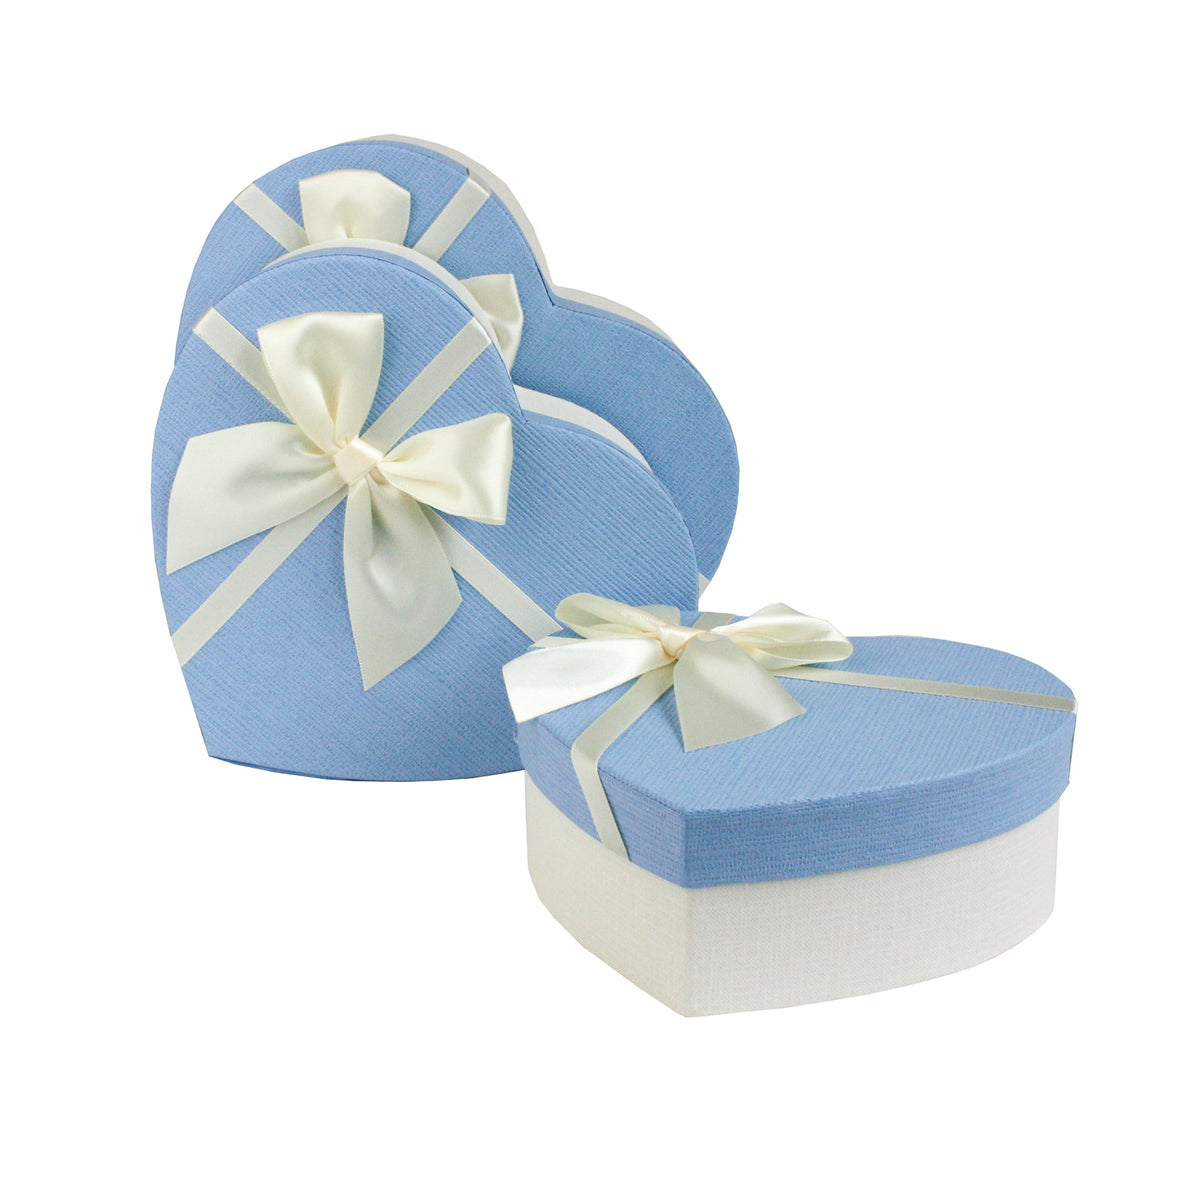 Set of 3 Heart White/Blue Gift Boxes With White Satin Ribbon